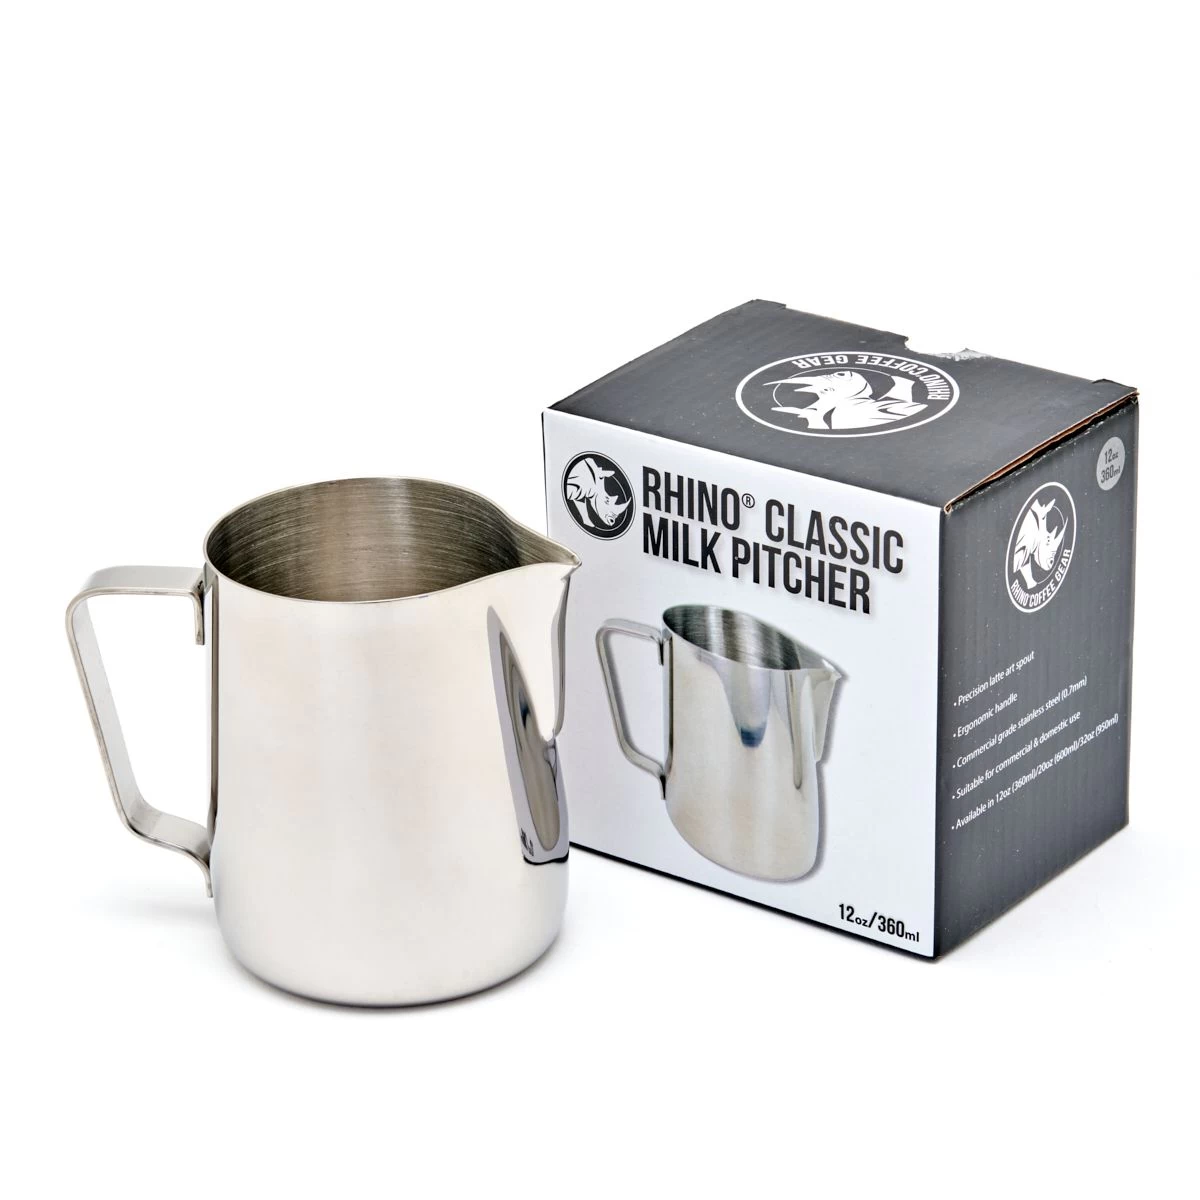 Rhino Classic milk pitcher - 360ml